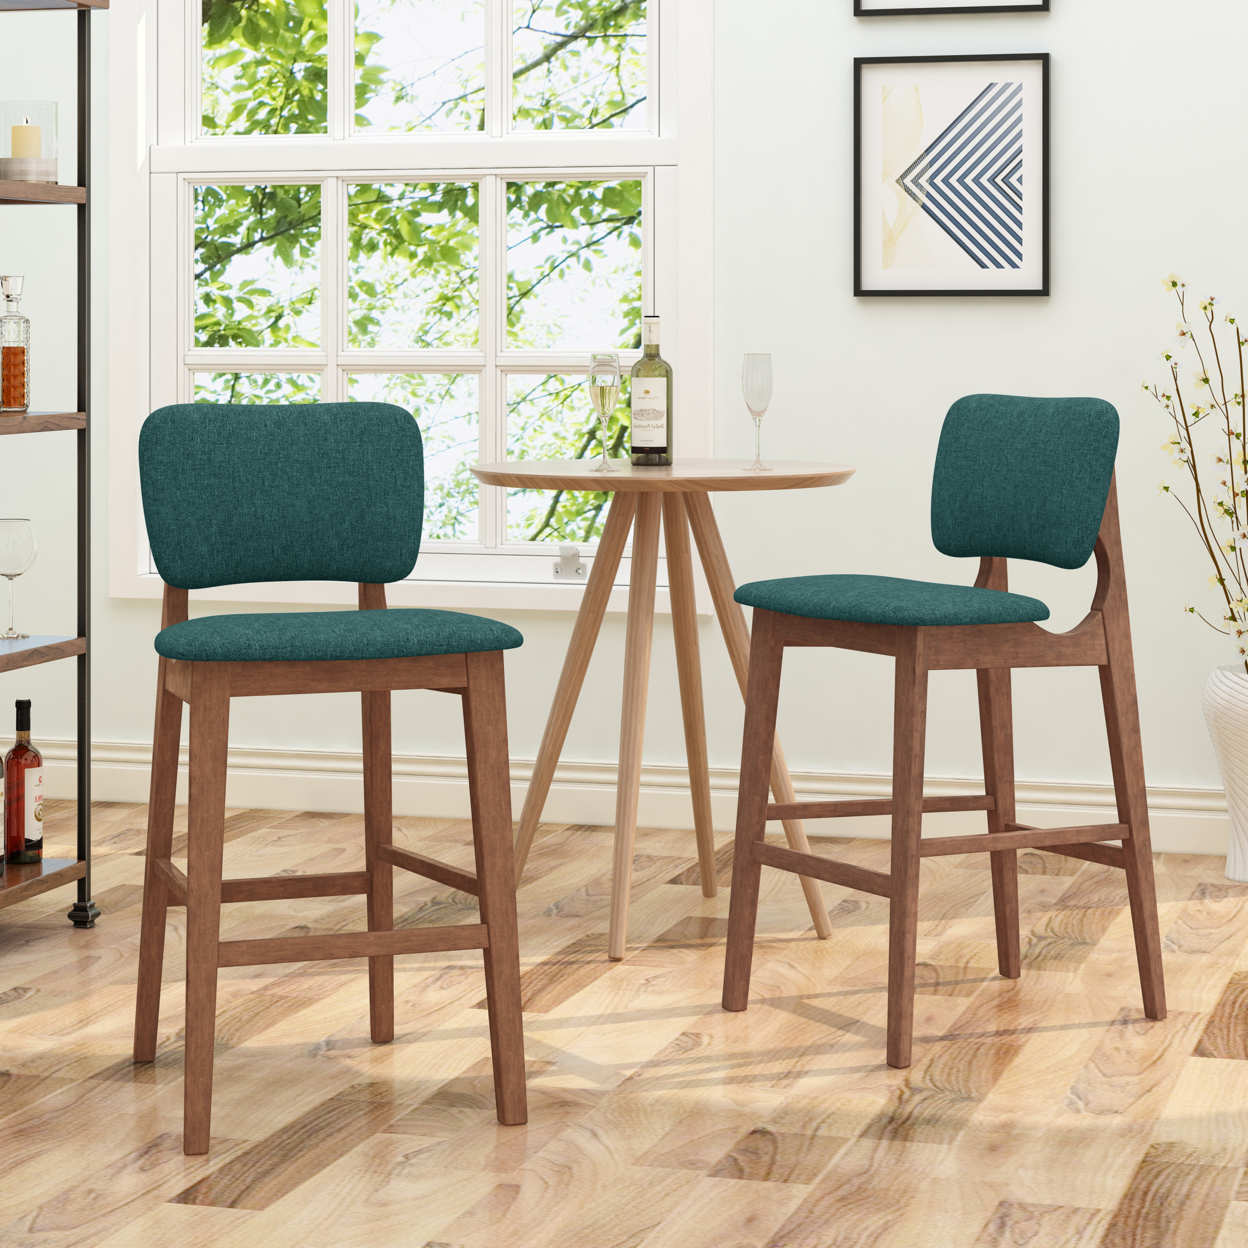 Luella 42 Wooden Bar Chair With Fabric Seats (Set Of 2) - Dark Green + Walnut Finish